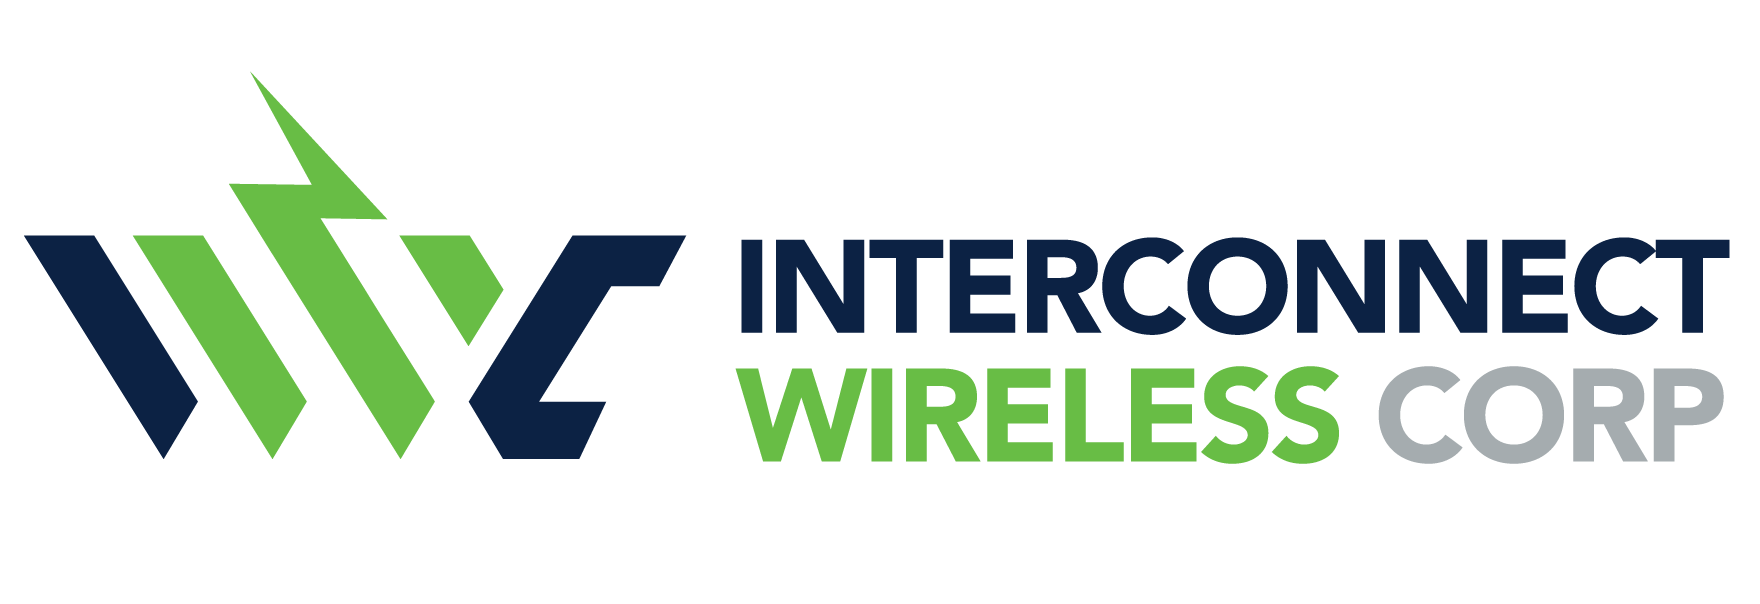 Interconnect Wireless